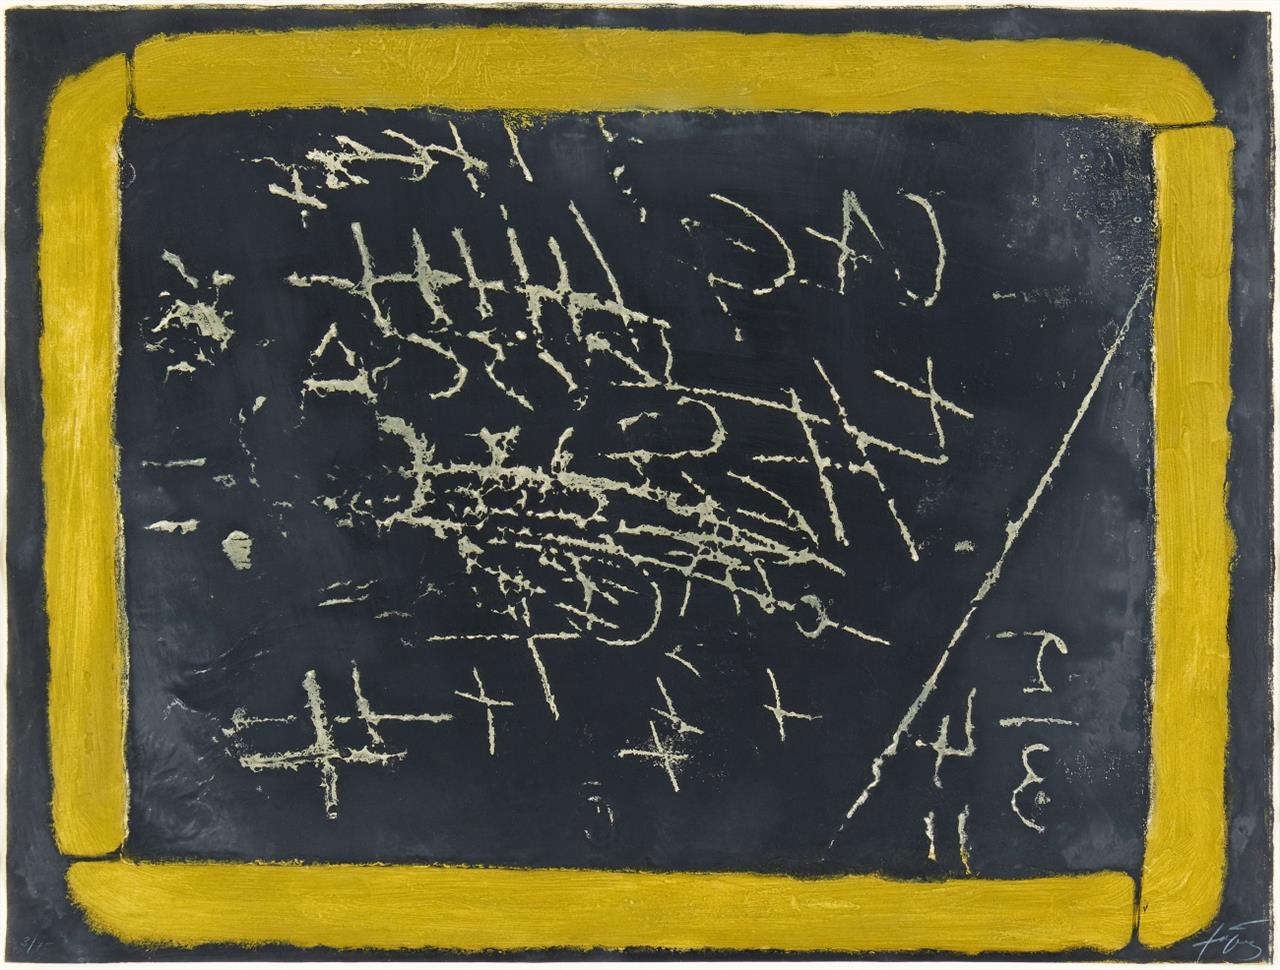 PISSARRA by Antoni Tàpies, 1972